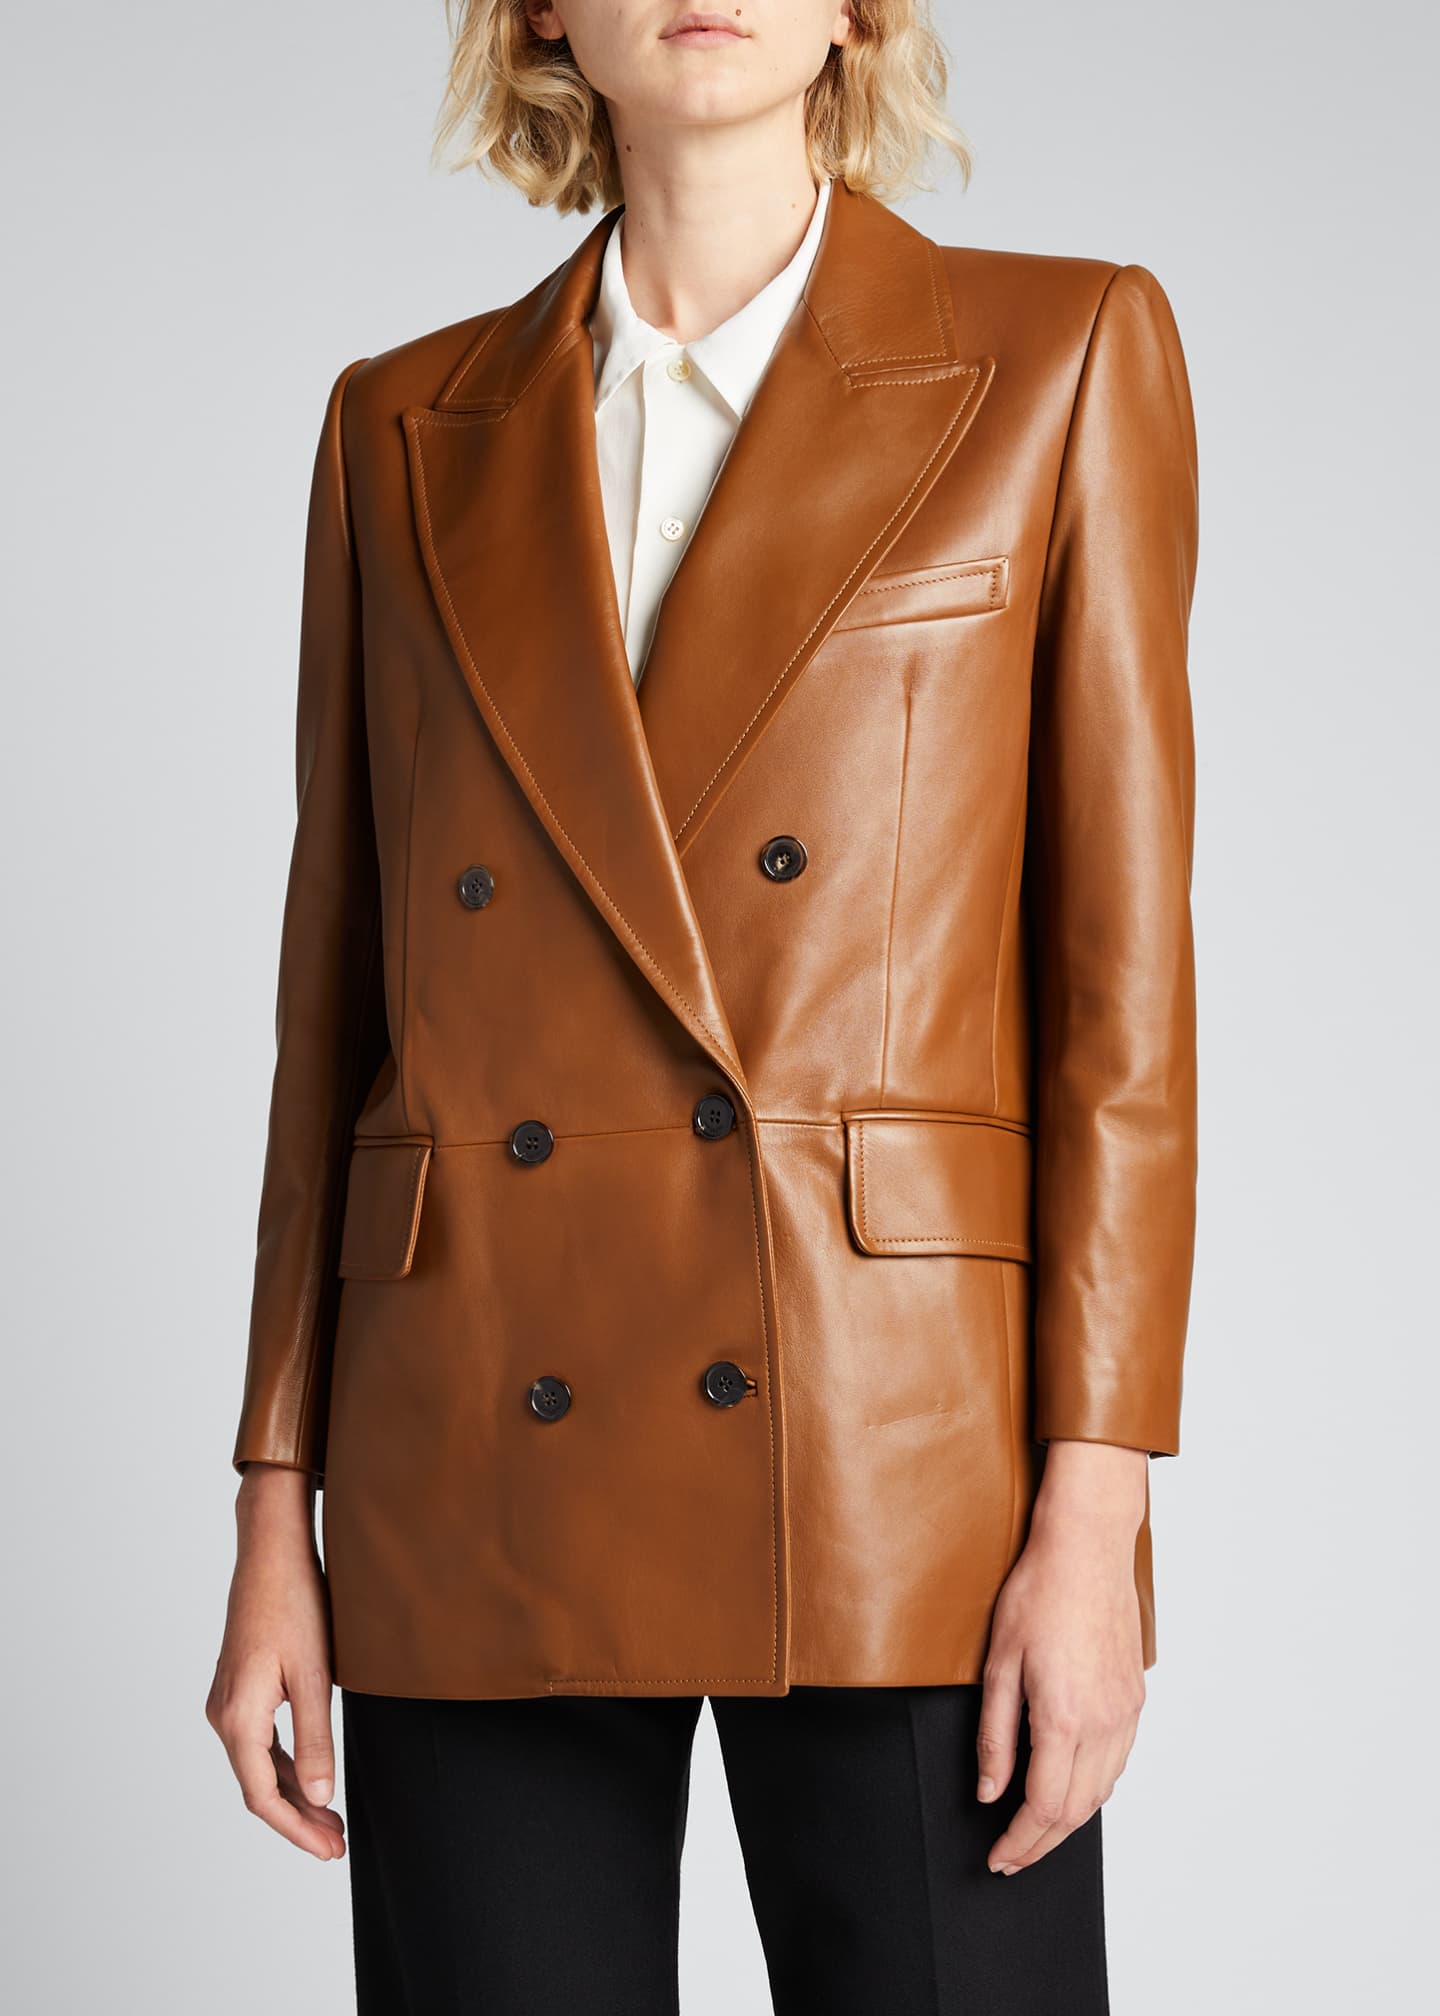 Saint Laurent Leather Double-Breasted Blazer Jacket - Bergdorf Goodman